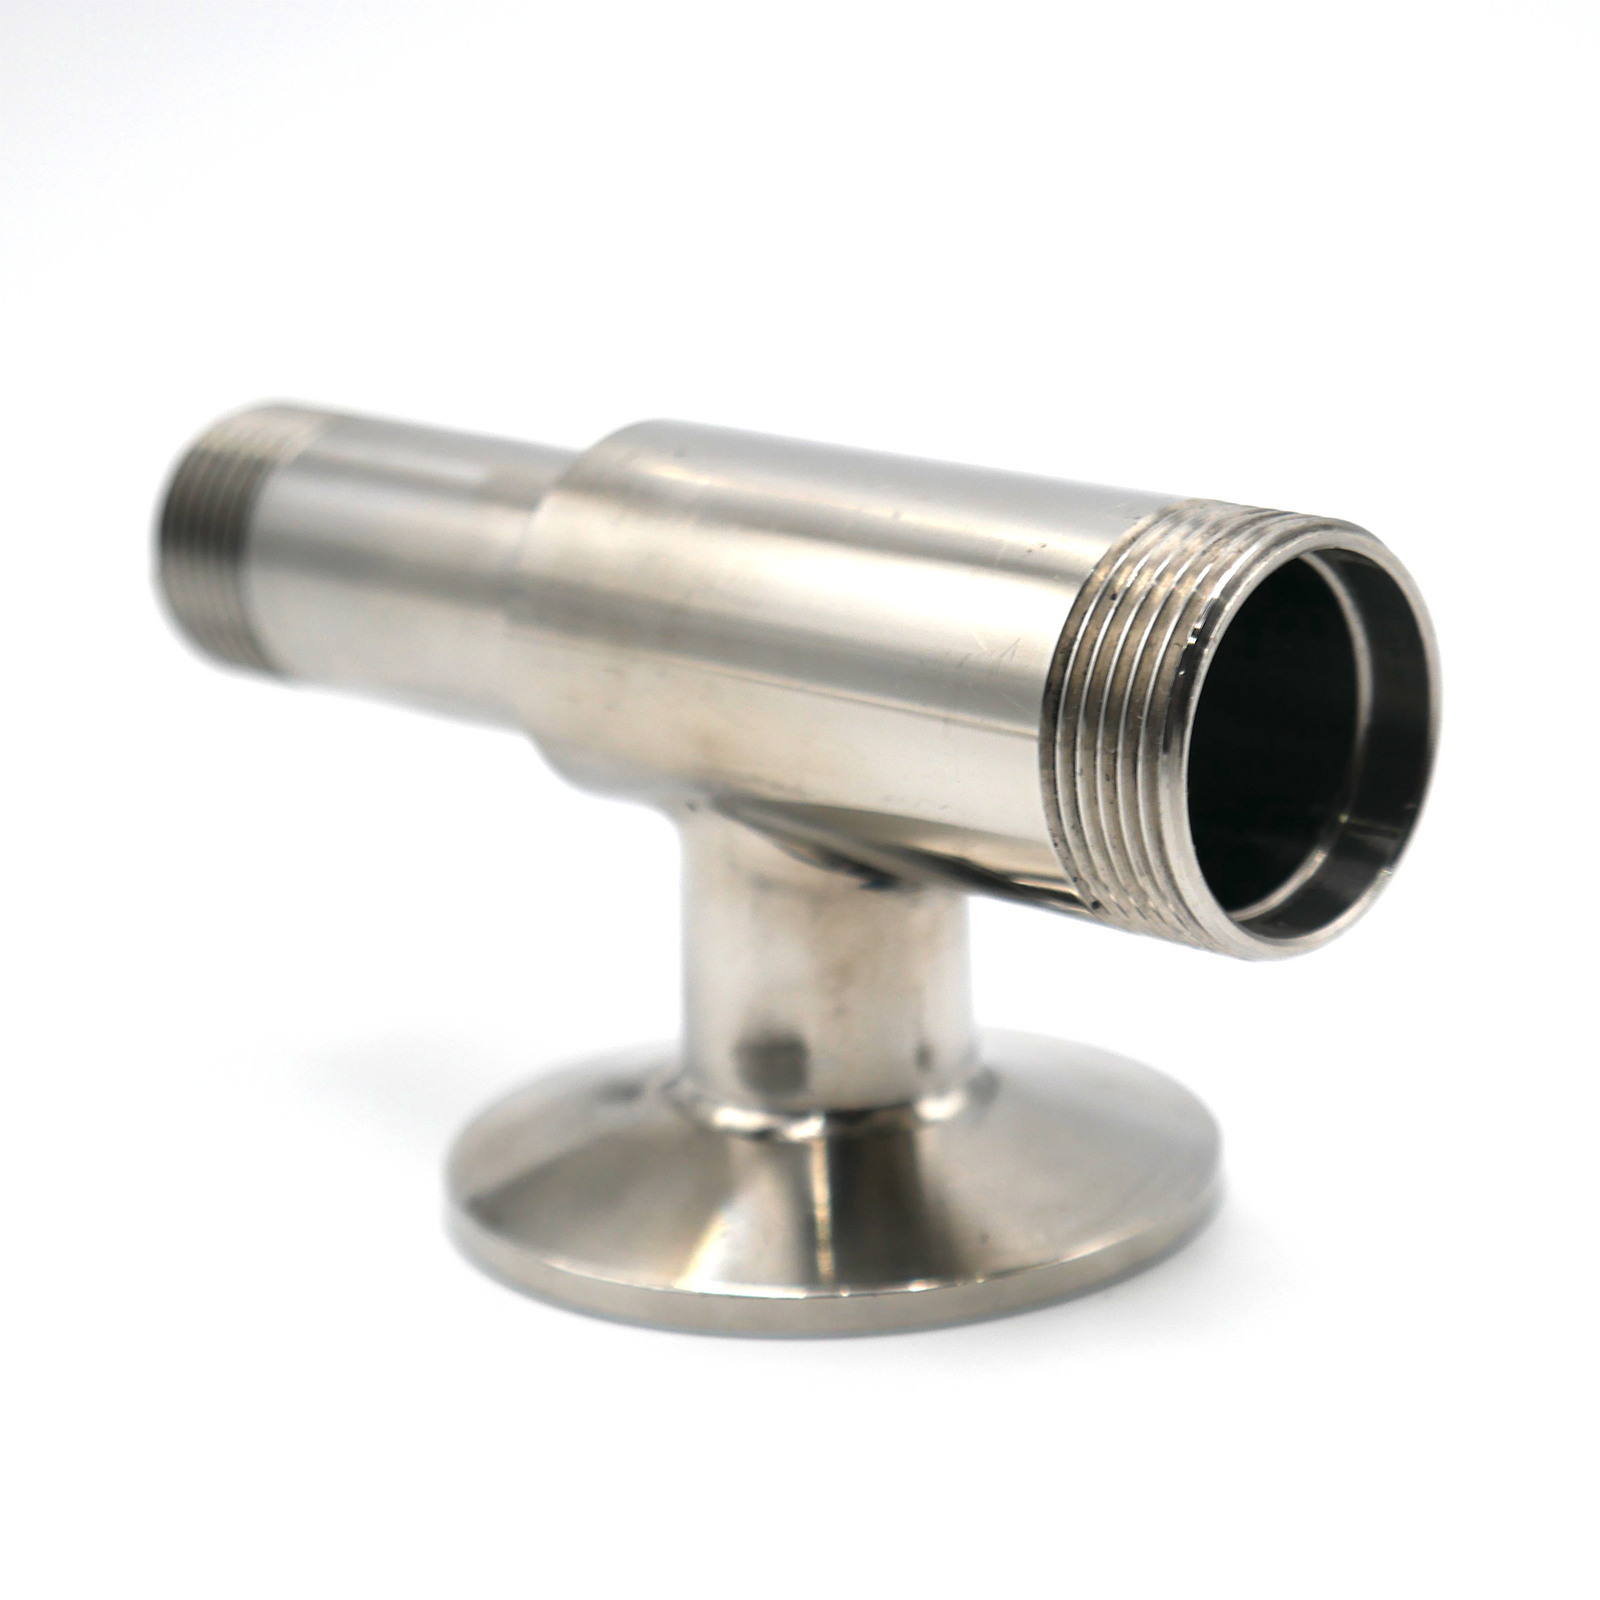 Type A nozzle body of dispensing nozzle